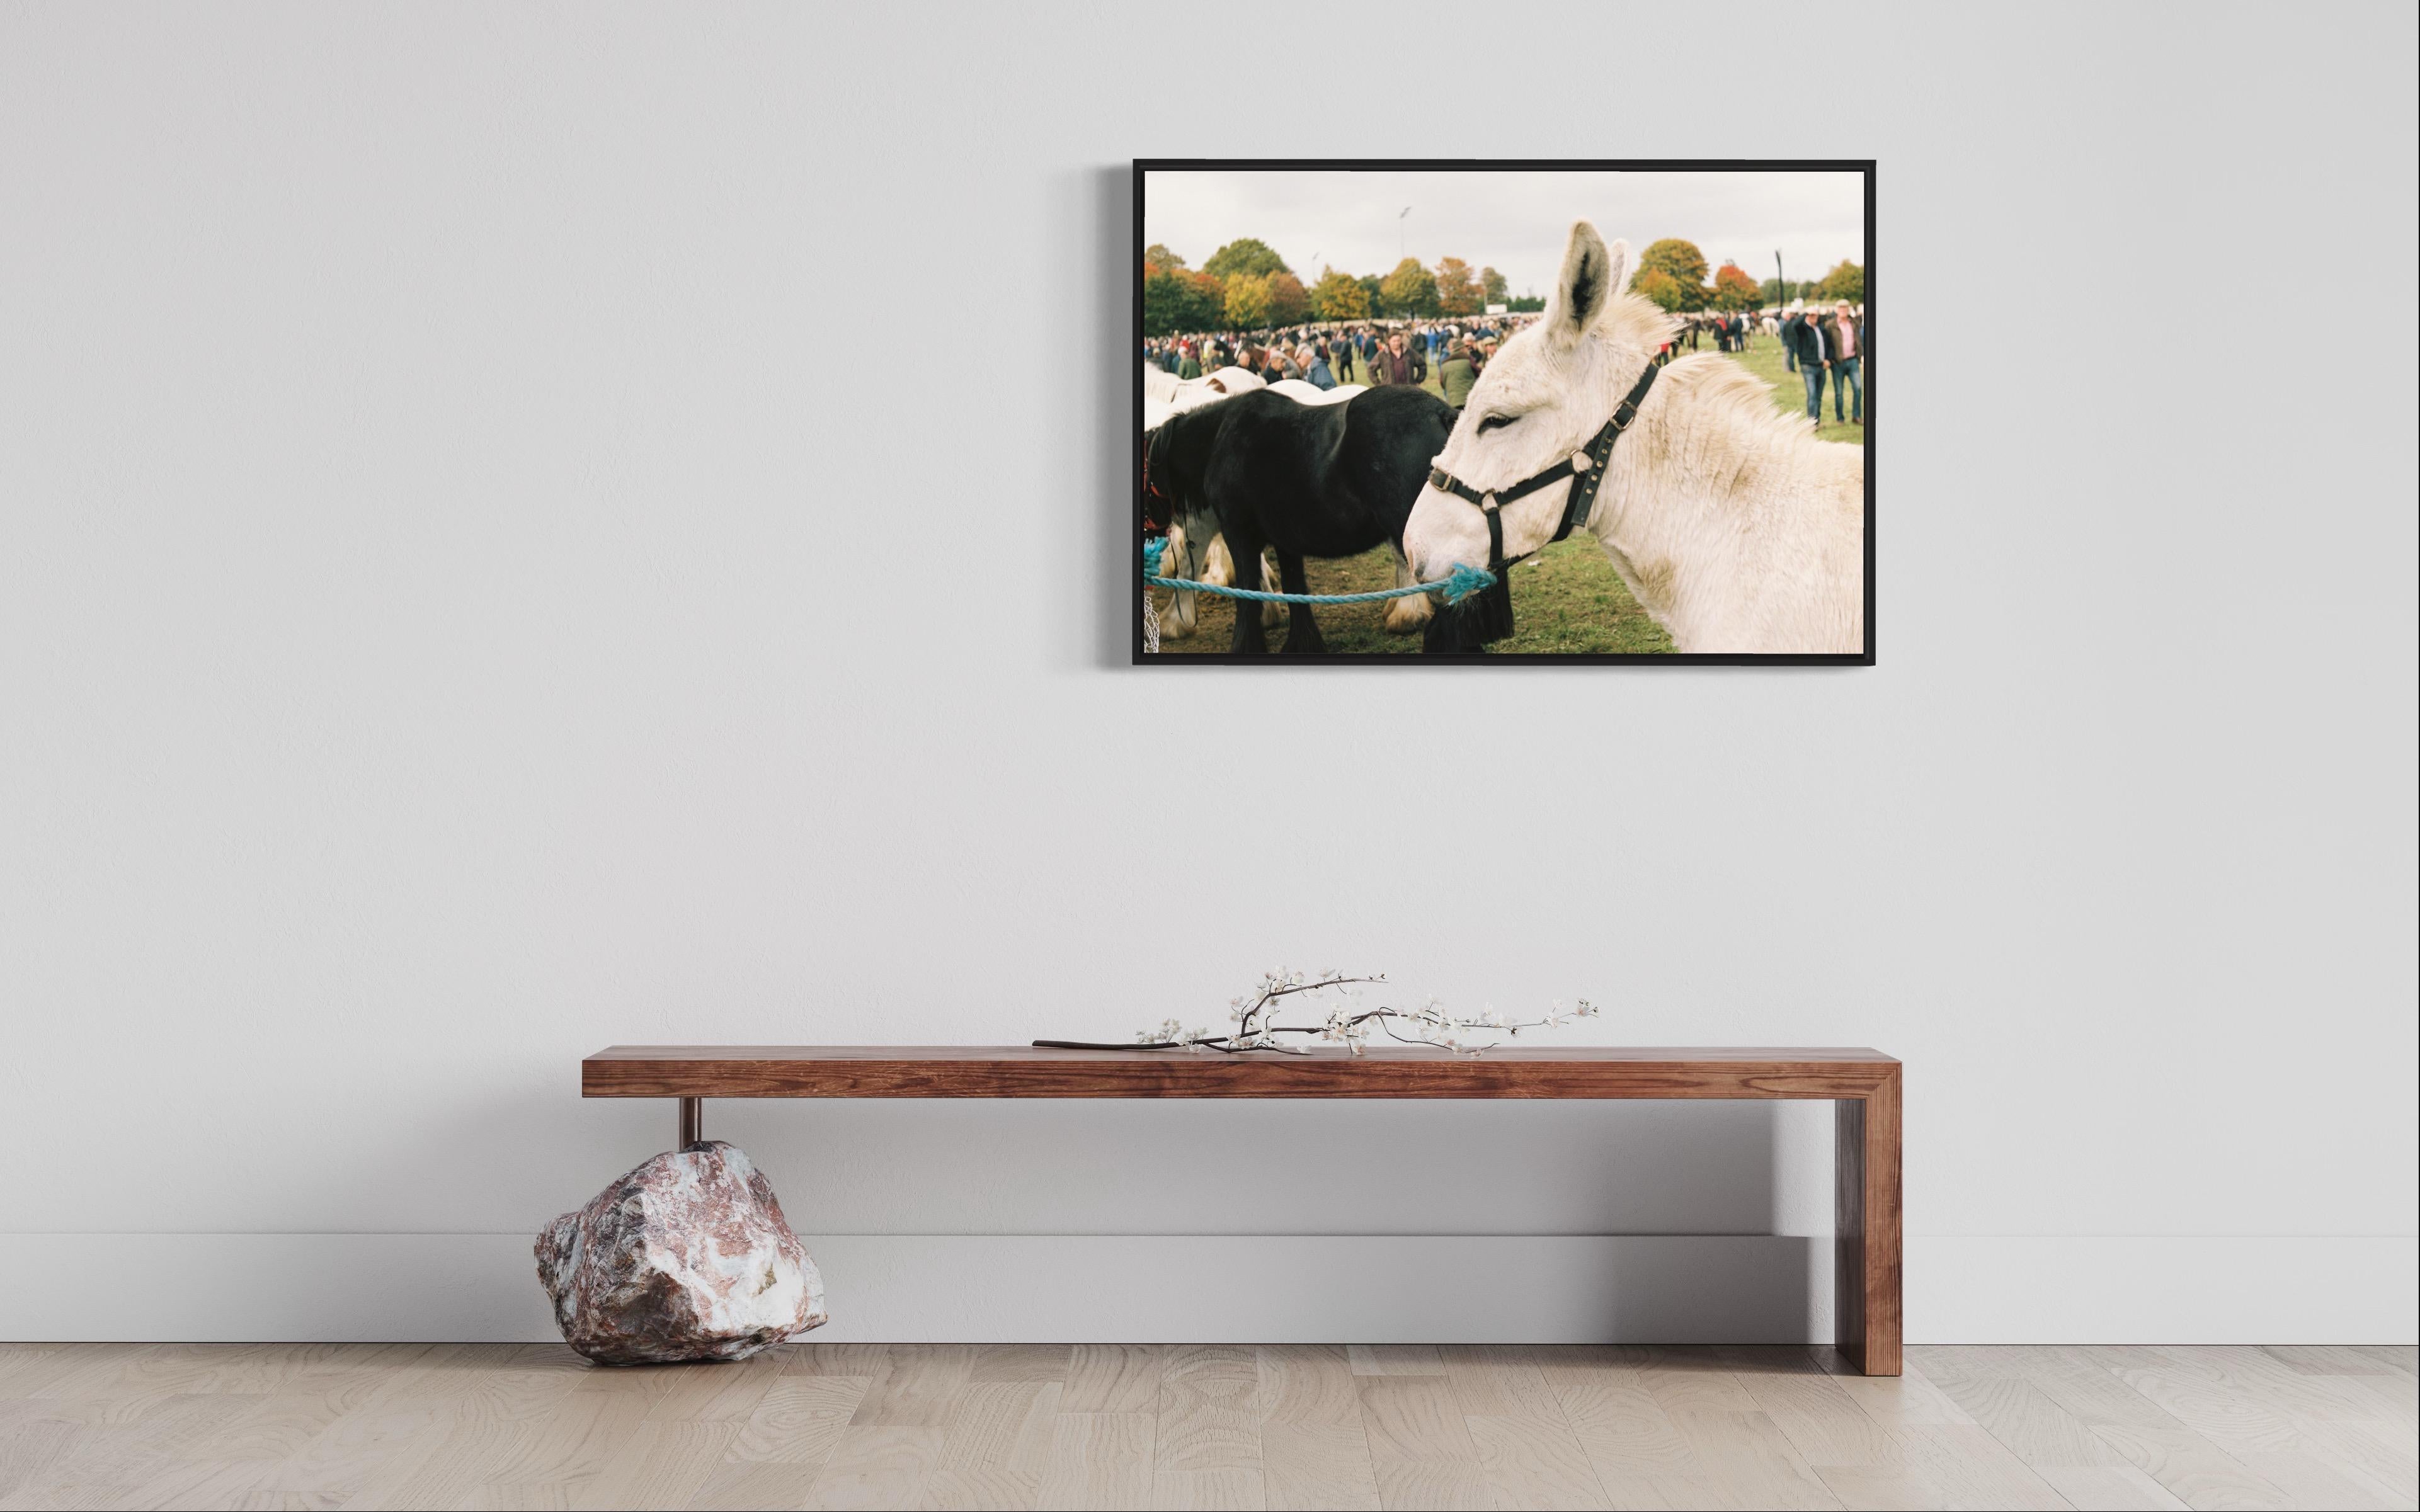 Horses - Ballinasloe Horse Fair, Ireland, 2018 - Print by Marion Bergin